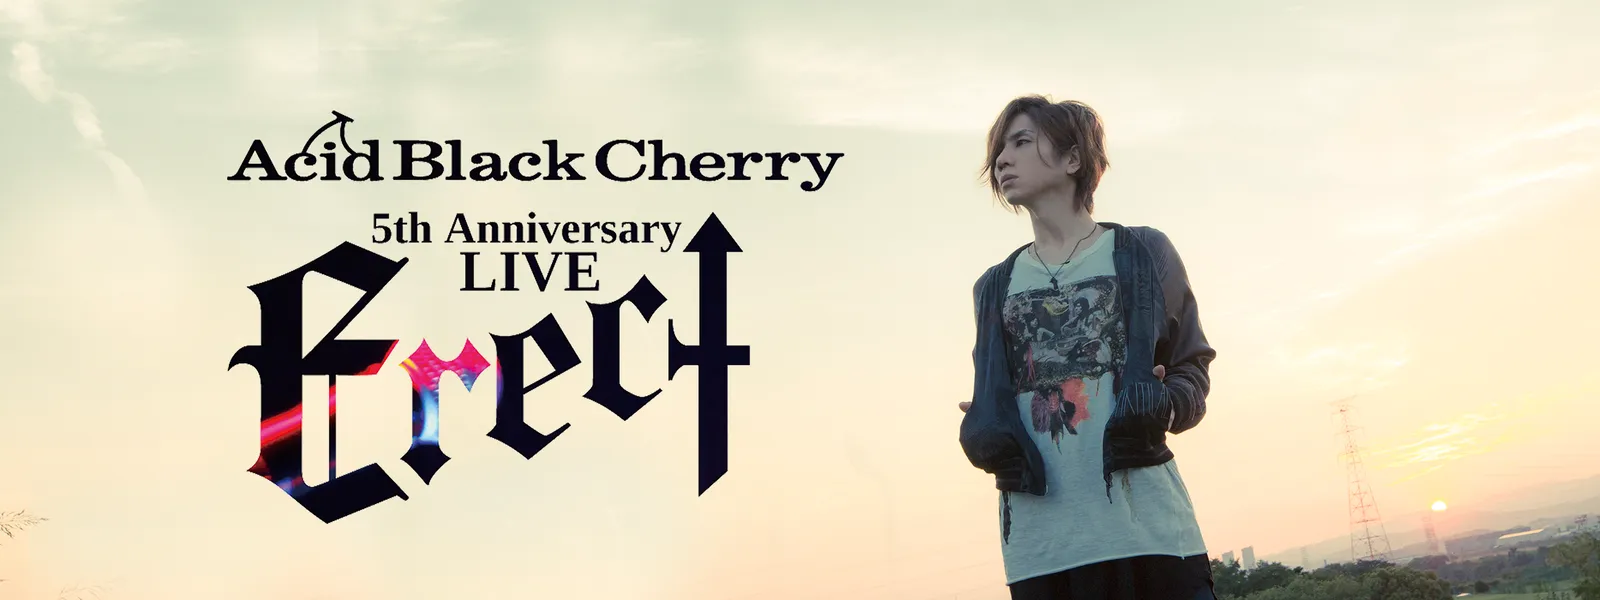 Acid Black Cherry 5th Anniversary Live Erect が見放題 Hulu フールー お試し無料